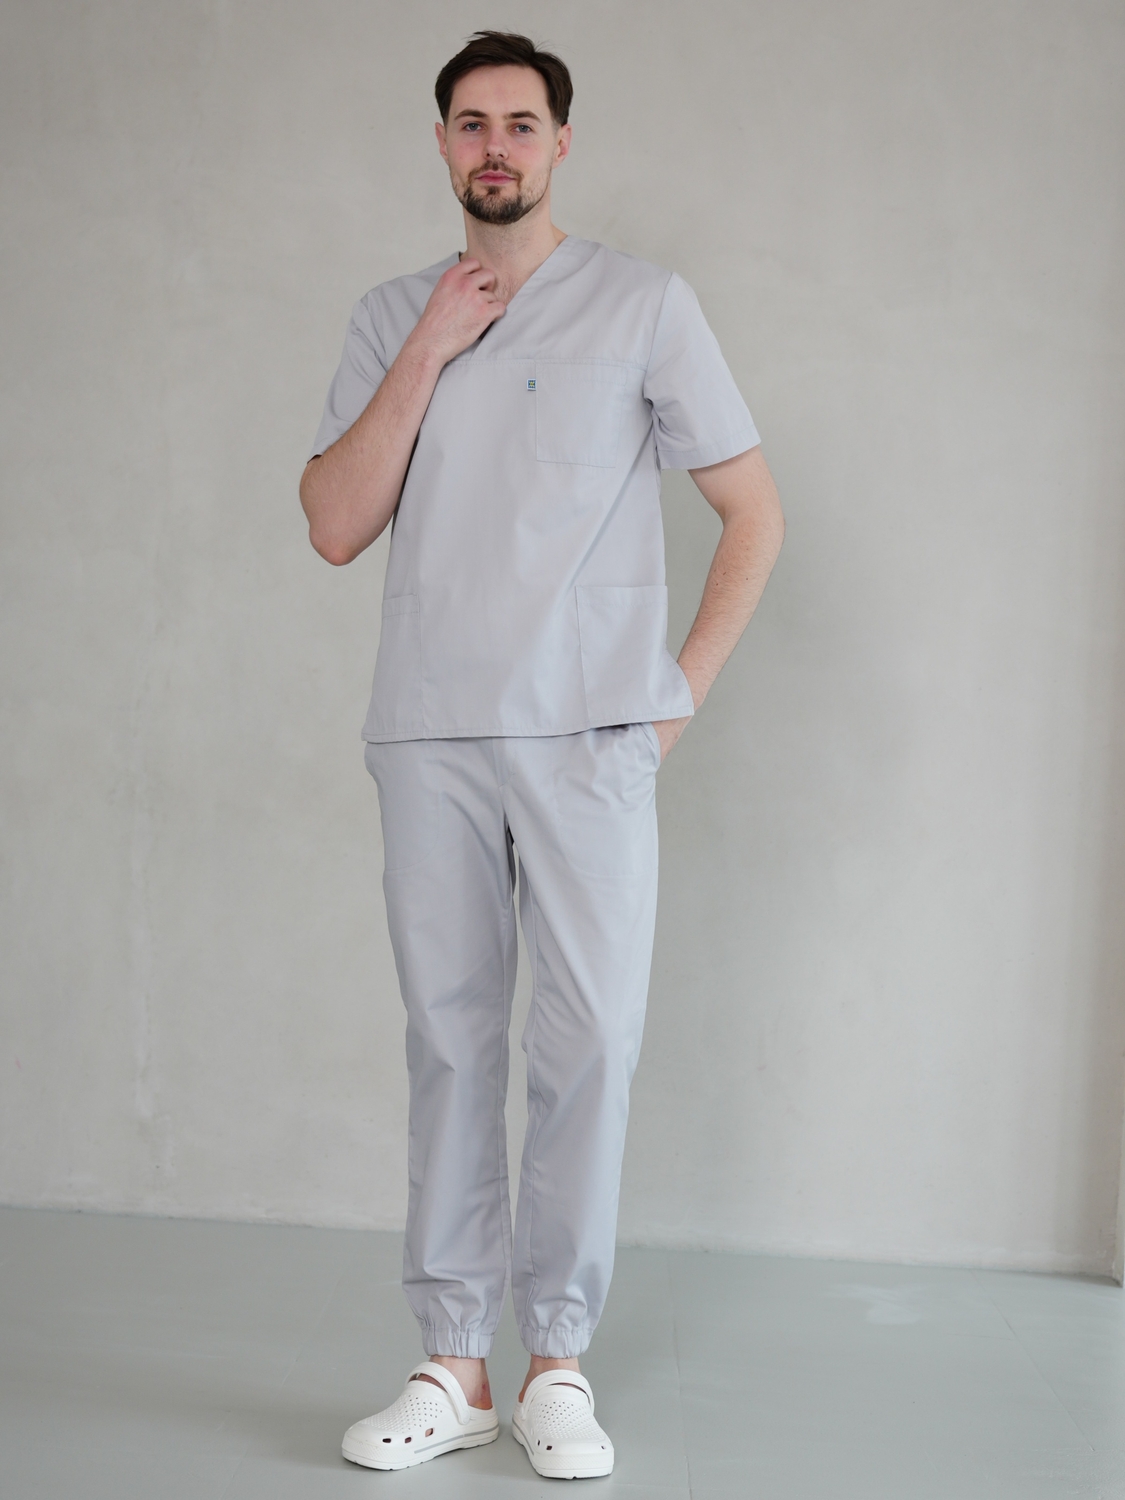 Мужской хирургический костюм 19-06 серый